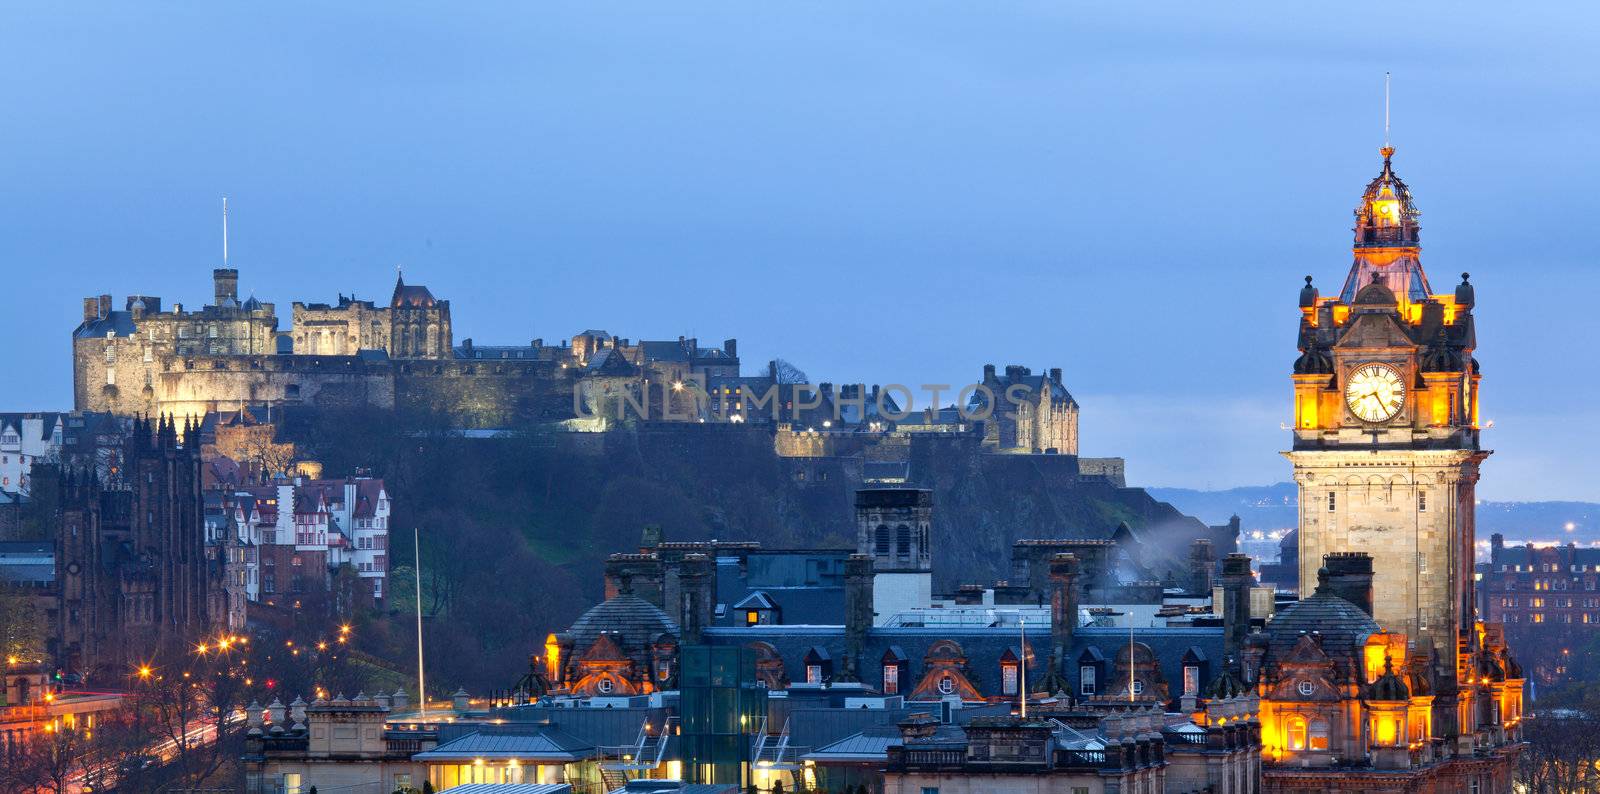 Edinburgh Panorama by vichie81